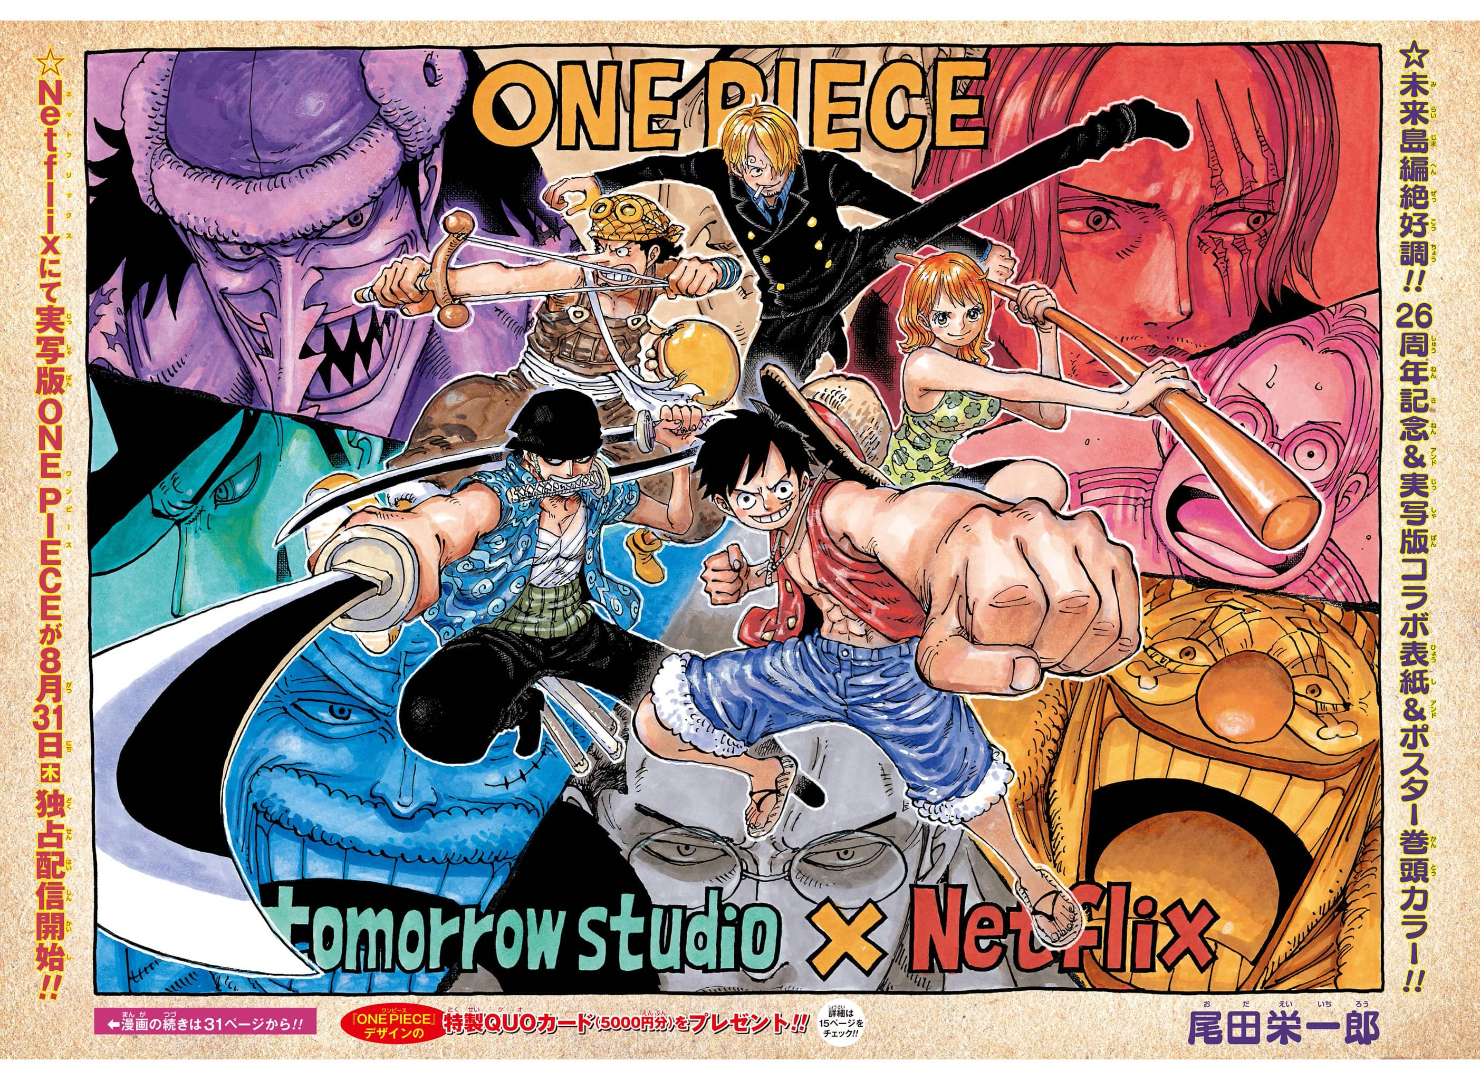 Revelados os títulos dos próximos episódios de 'One Piece' (978 a 981)